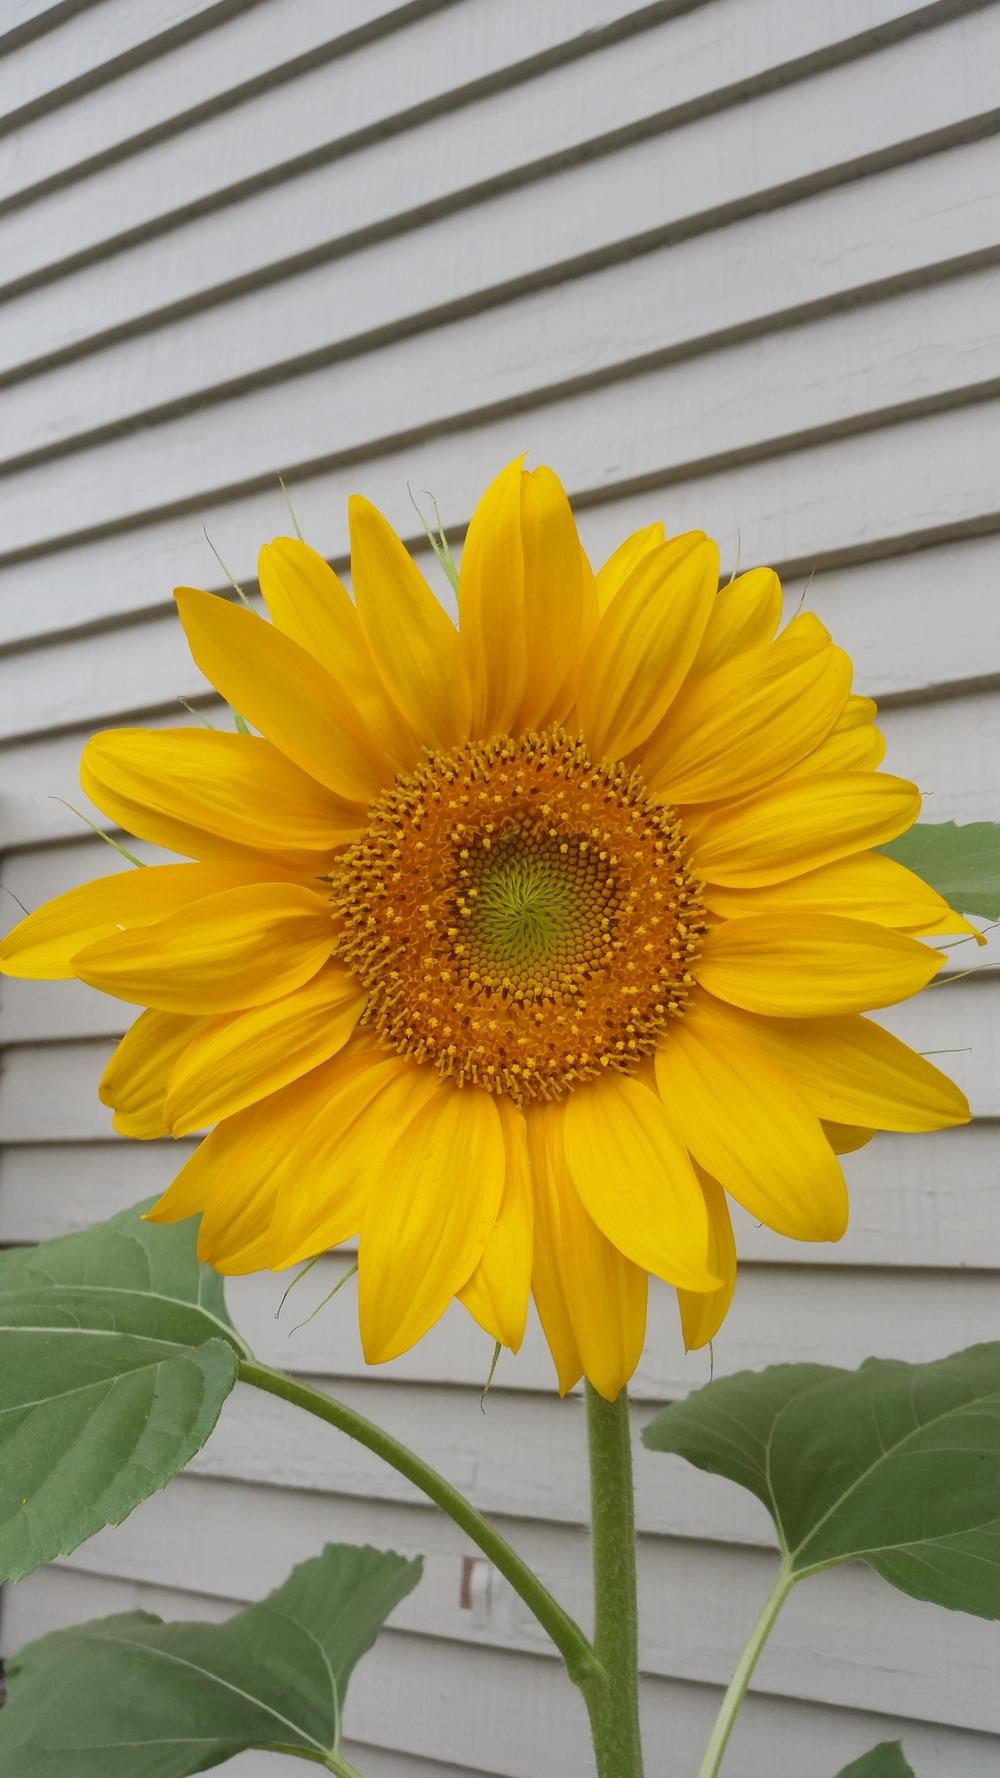 Photo of Sunflowers (Helianthus annuus) uploaded by nicodiangel_no